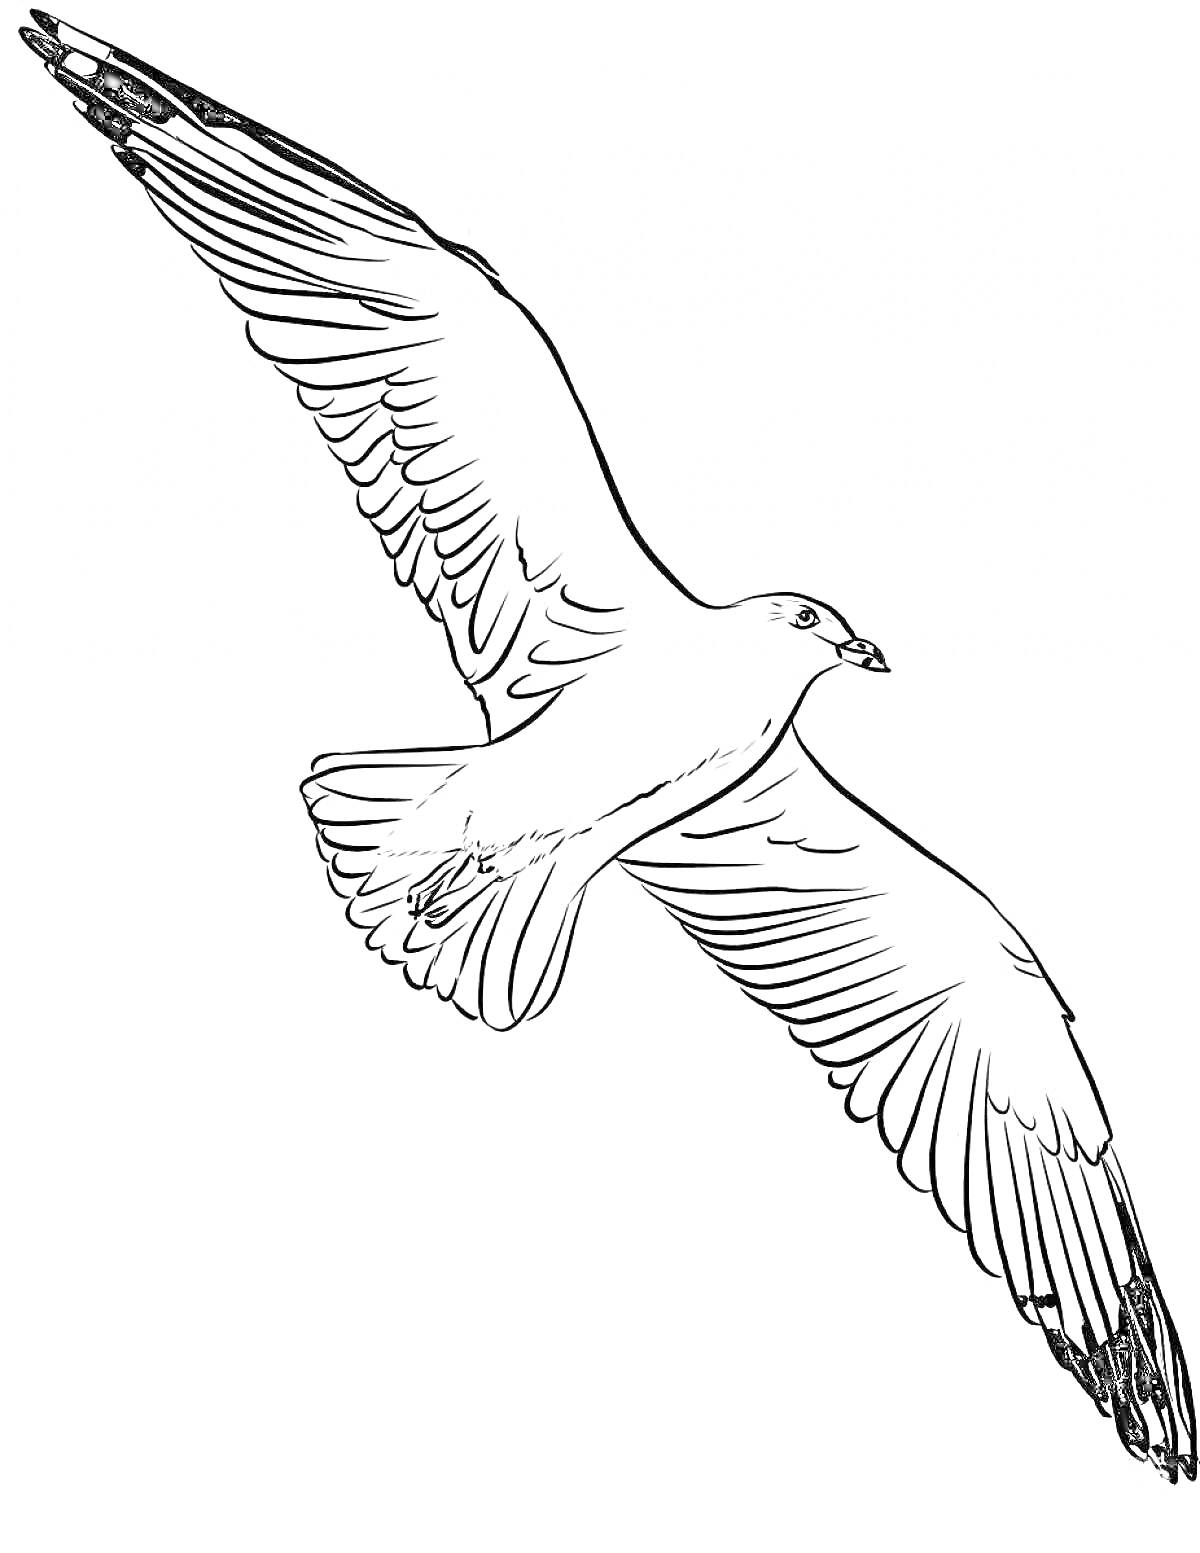 Раскраска Летящая чайка, раскинувшая крылья